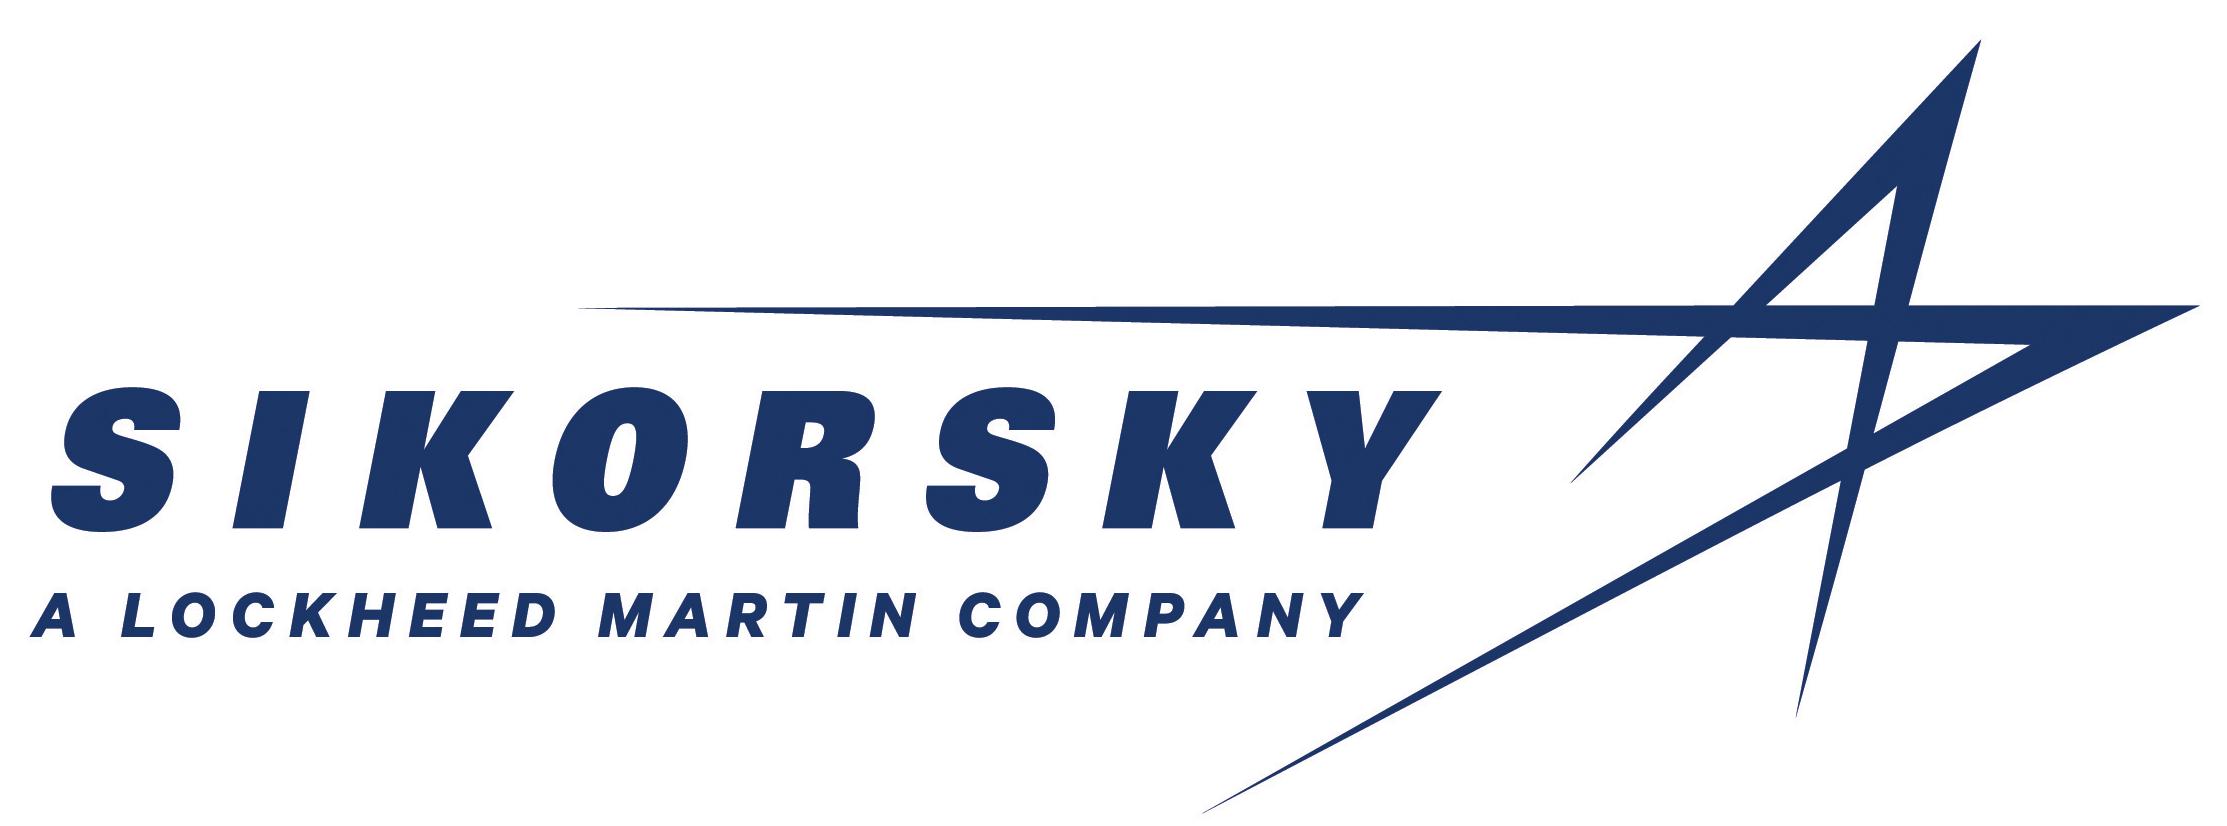 Aircraft Company Logo - File:Sikorsky Aircraft Logo.png - Wikimedia Commons